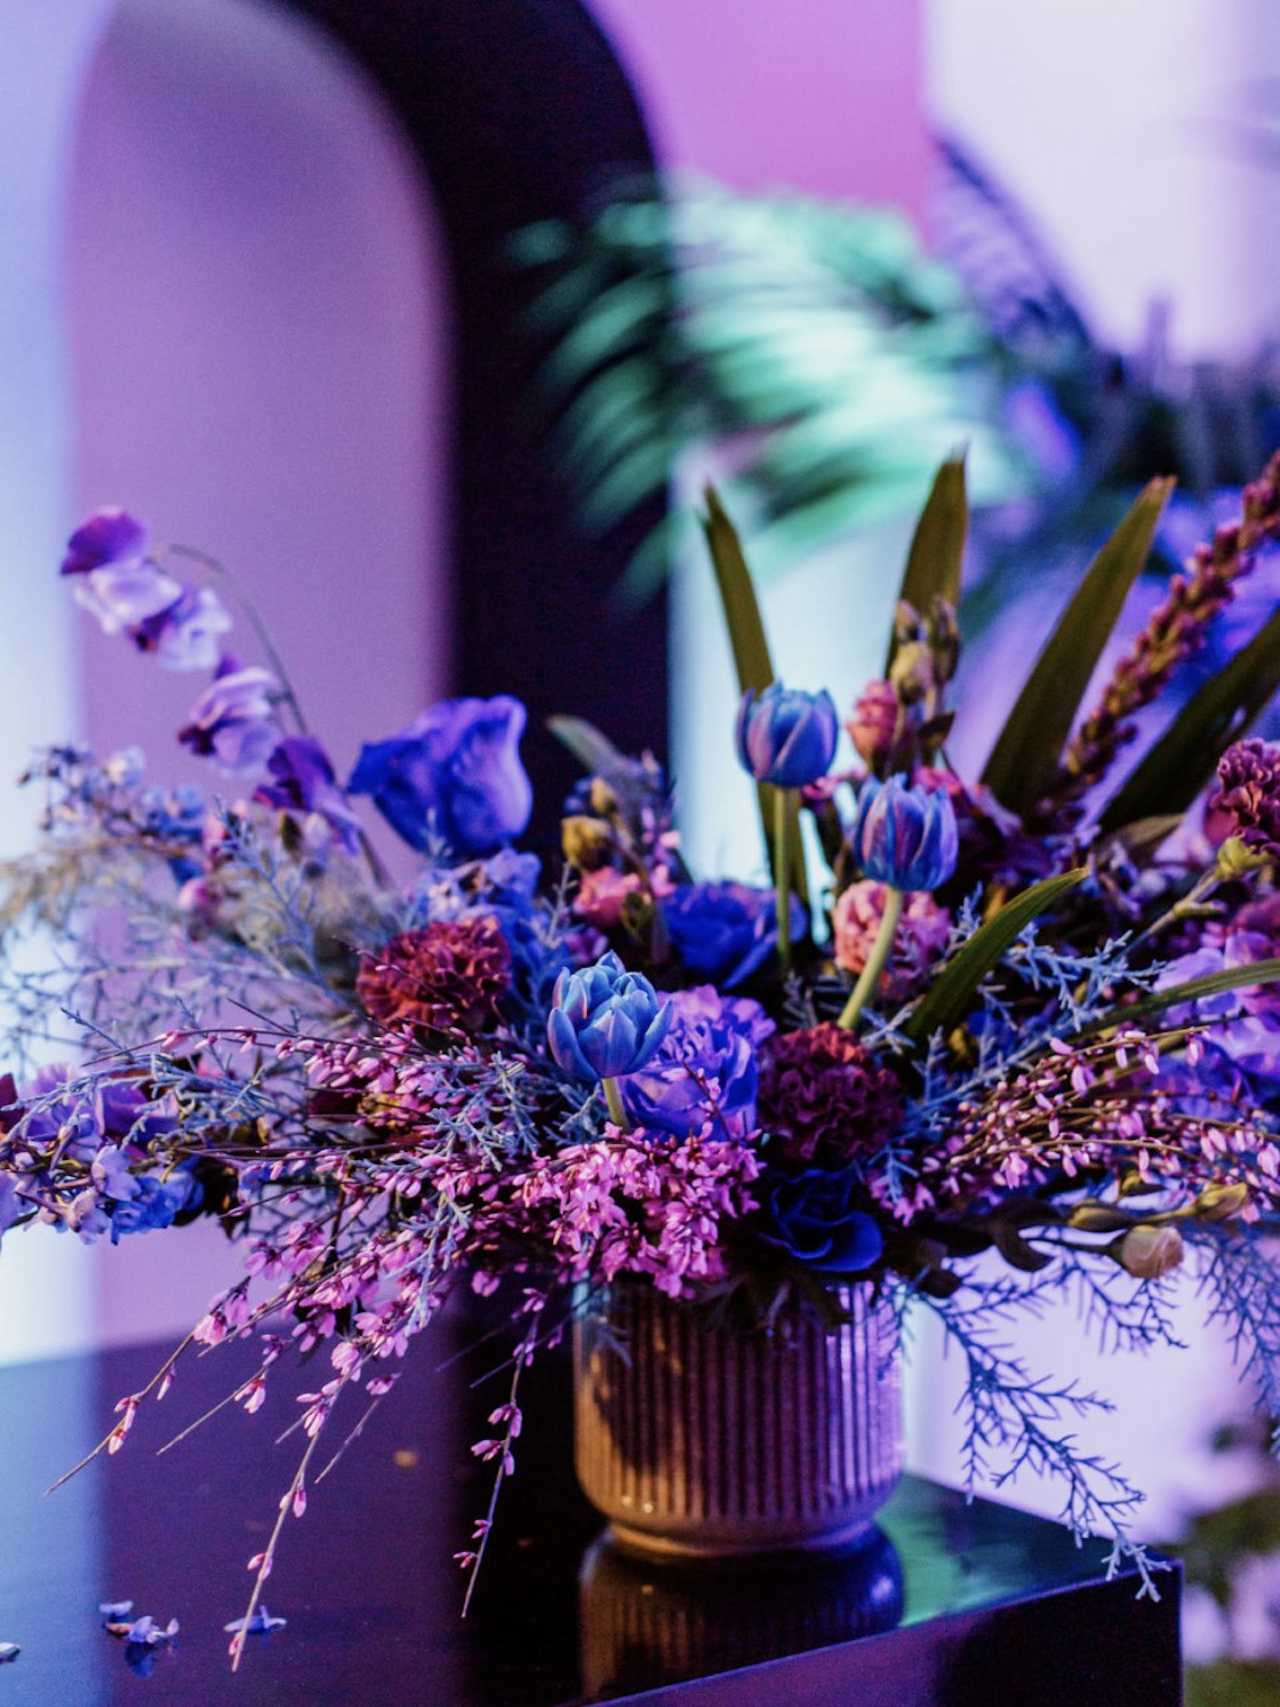 A floral arrangement at an event designed by Susan Houmes